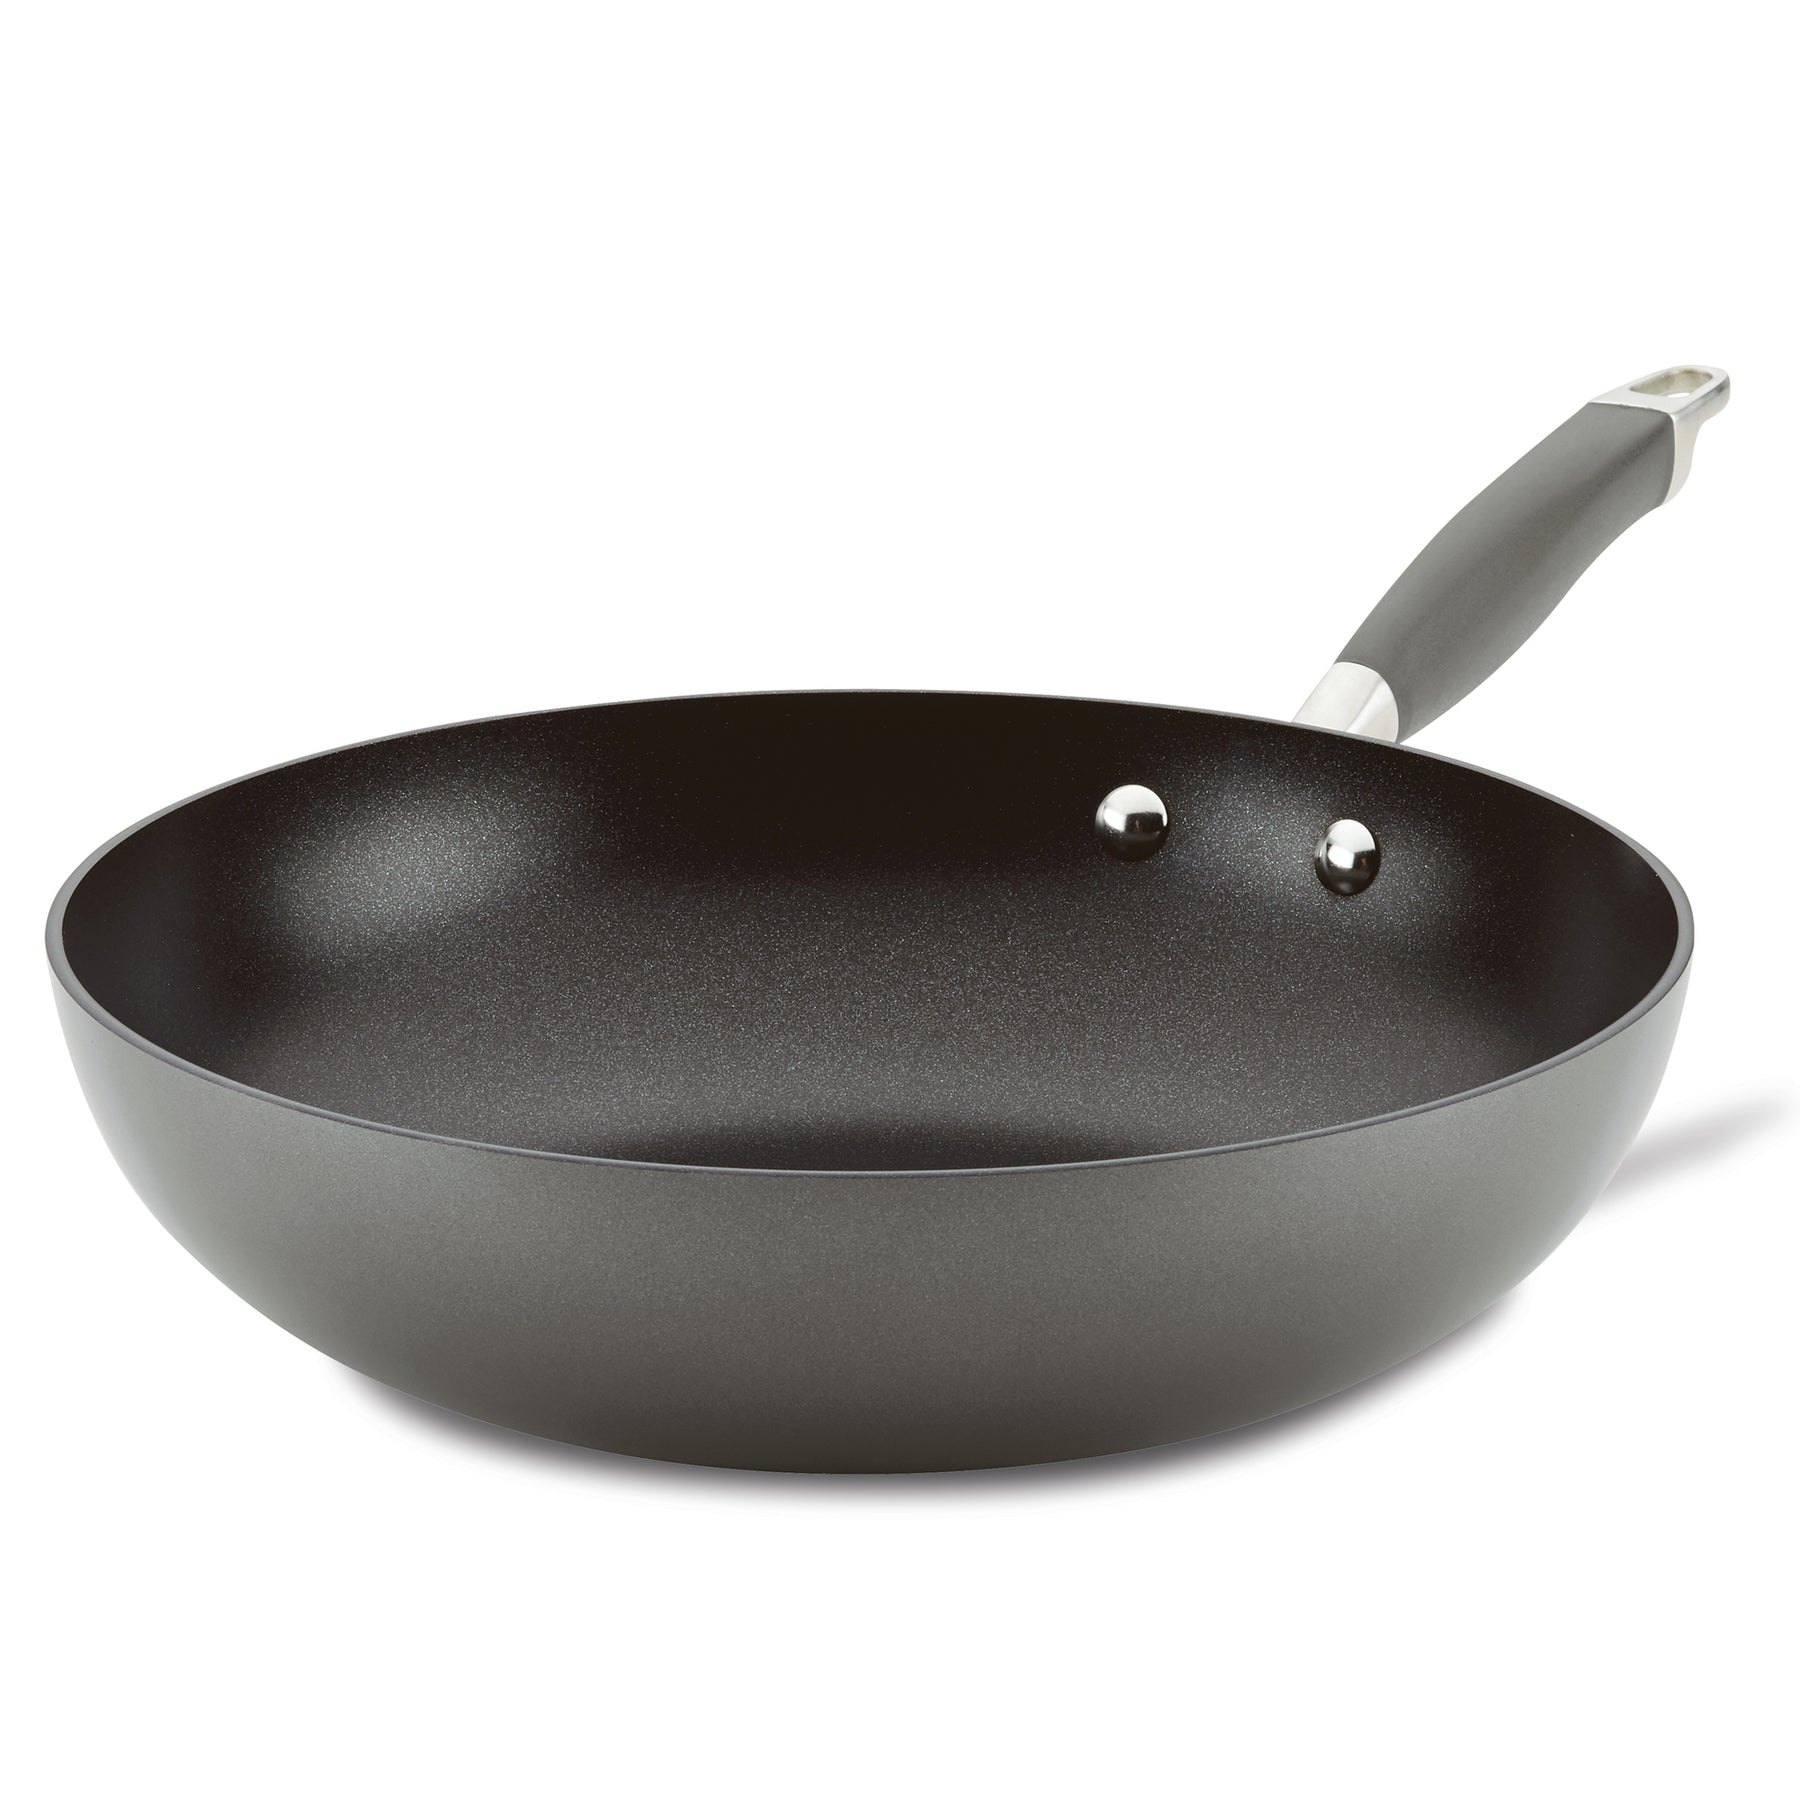 12-Inch Ultimate Stir Fry Pan